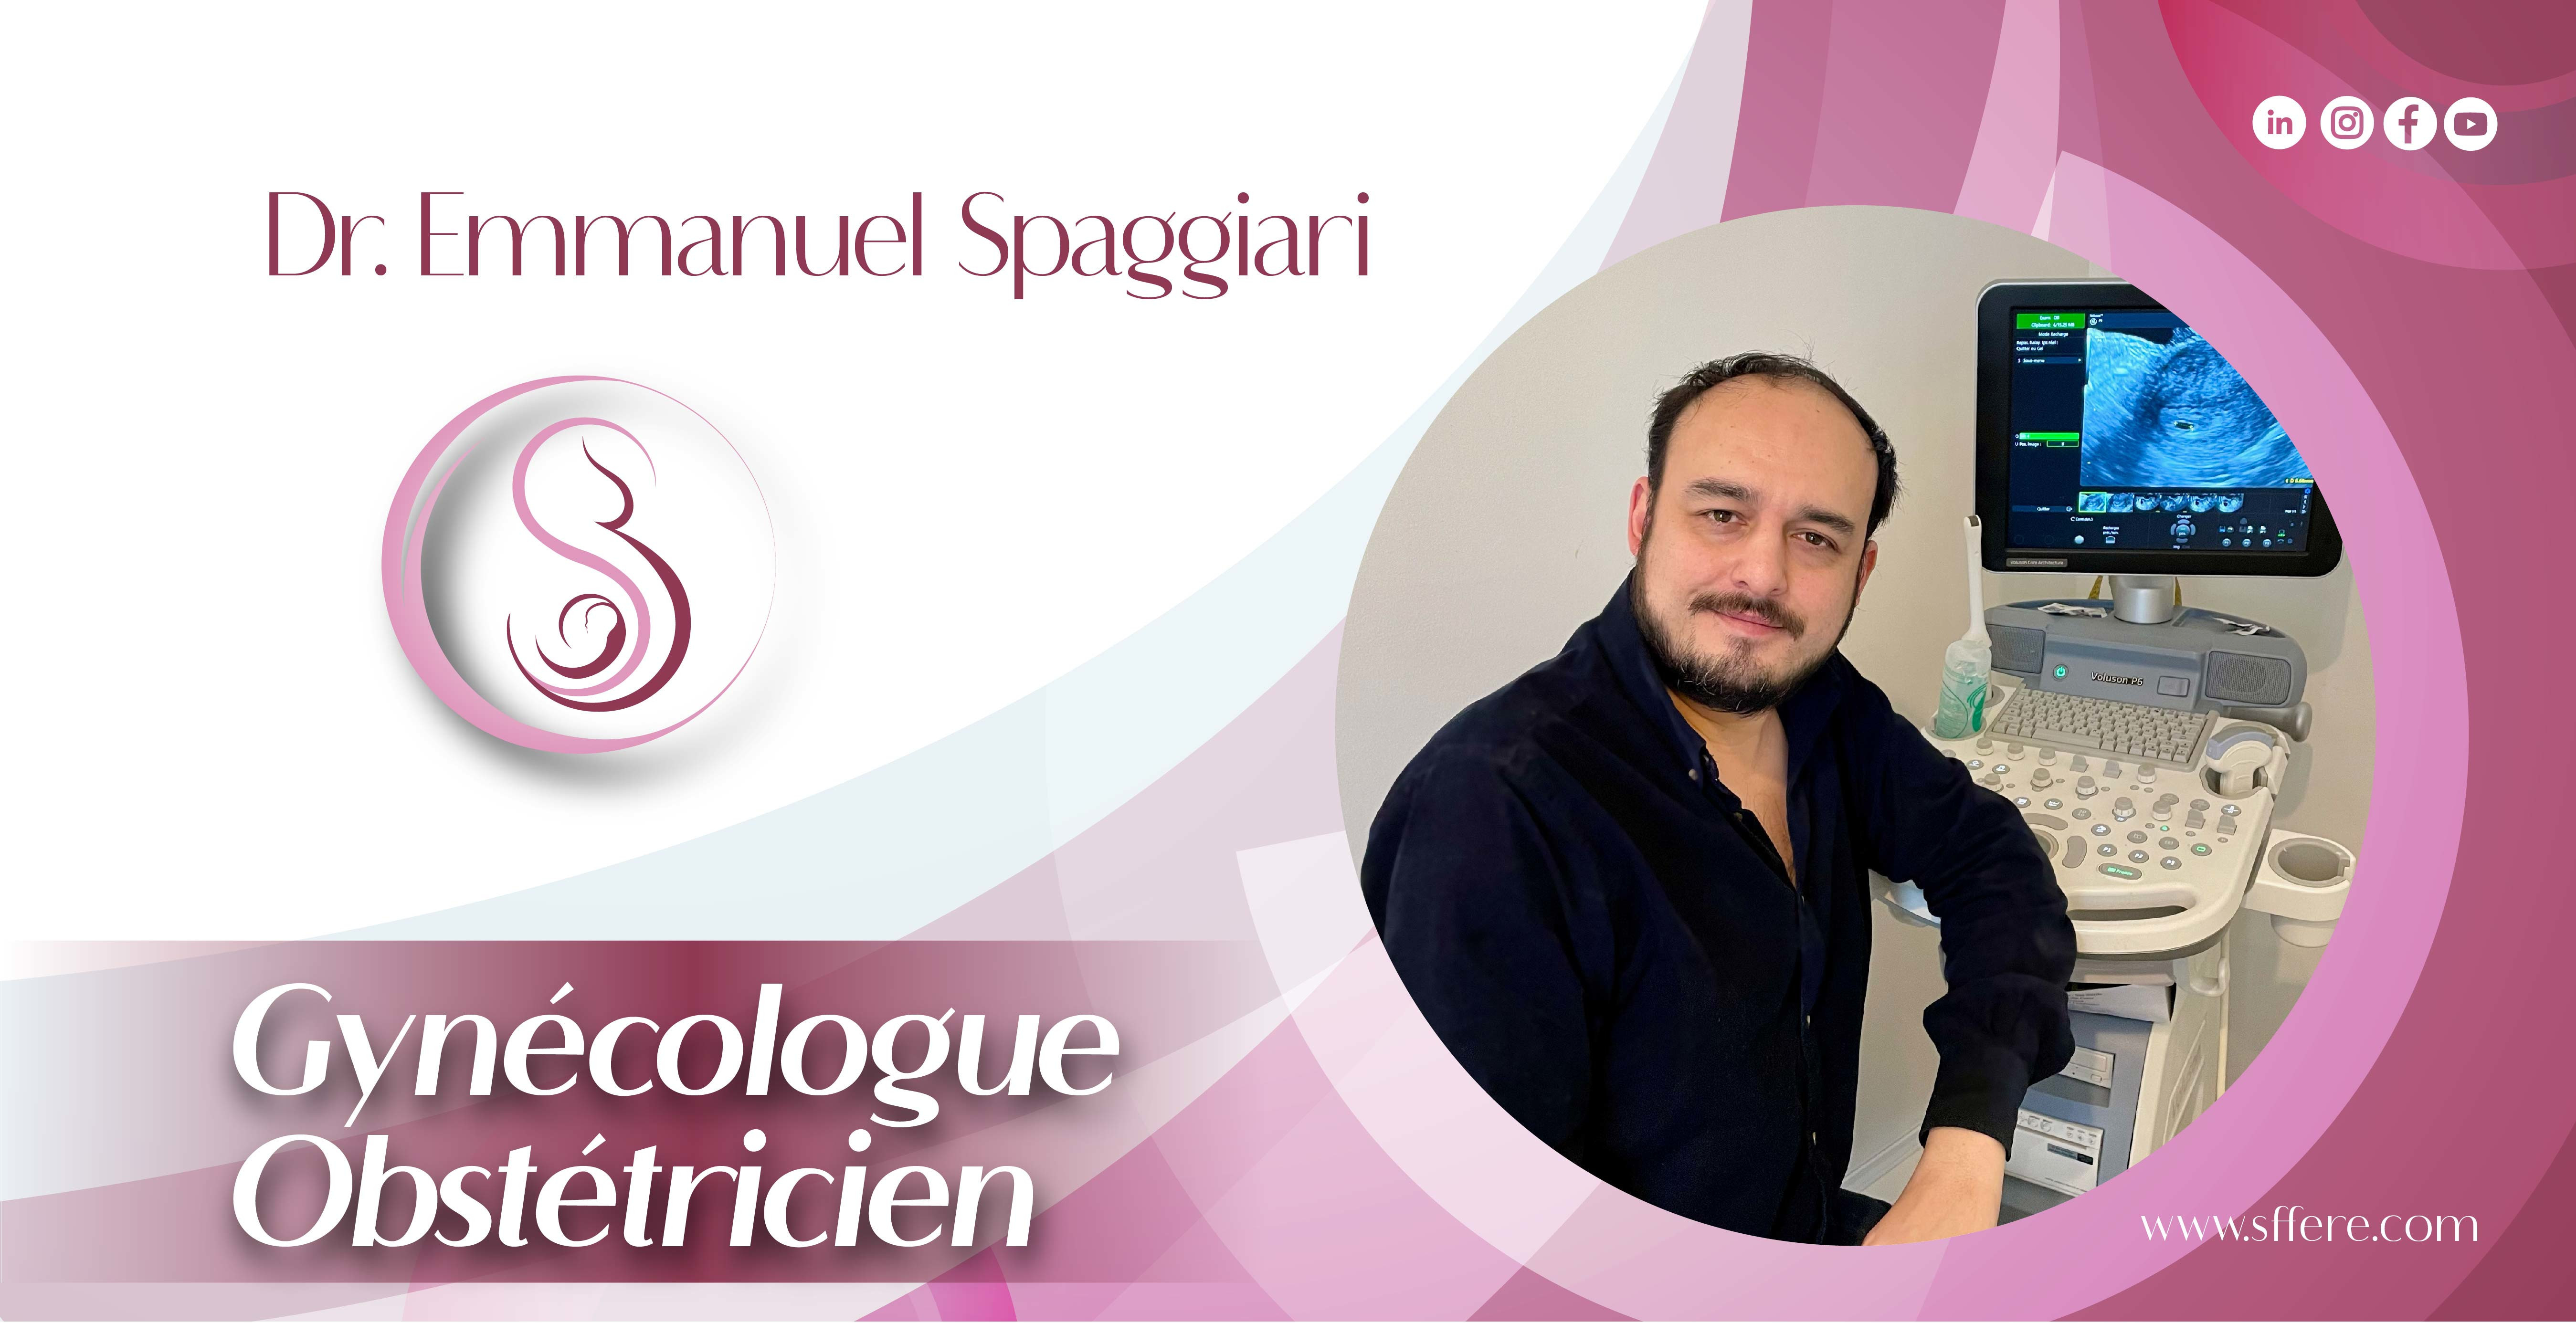 Bienvenue au Dr. Emmanuel Spaggiari !